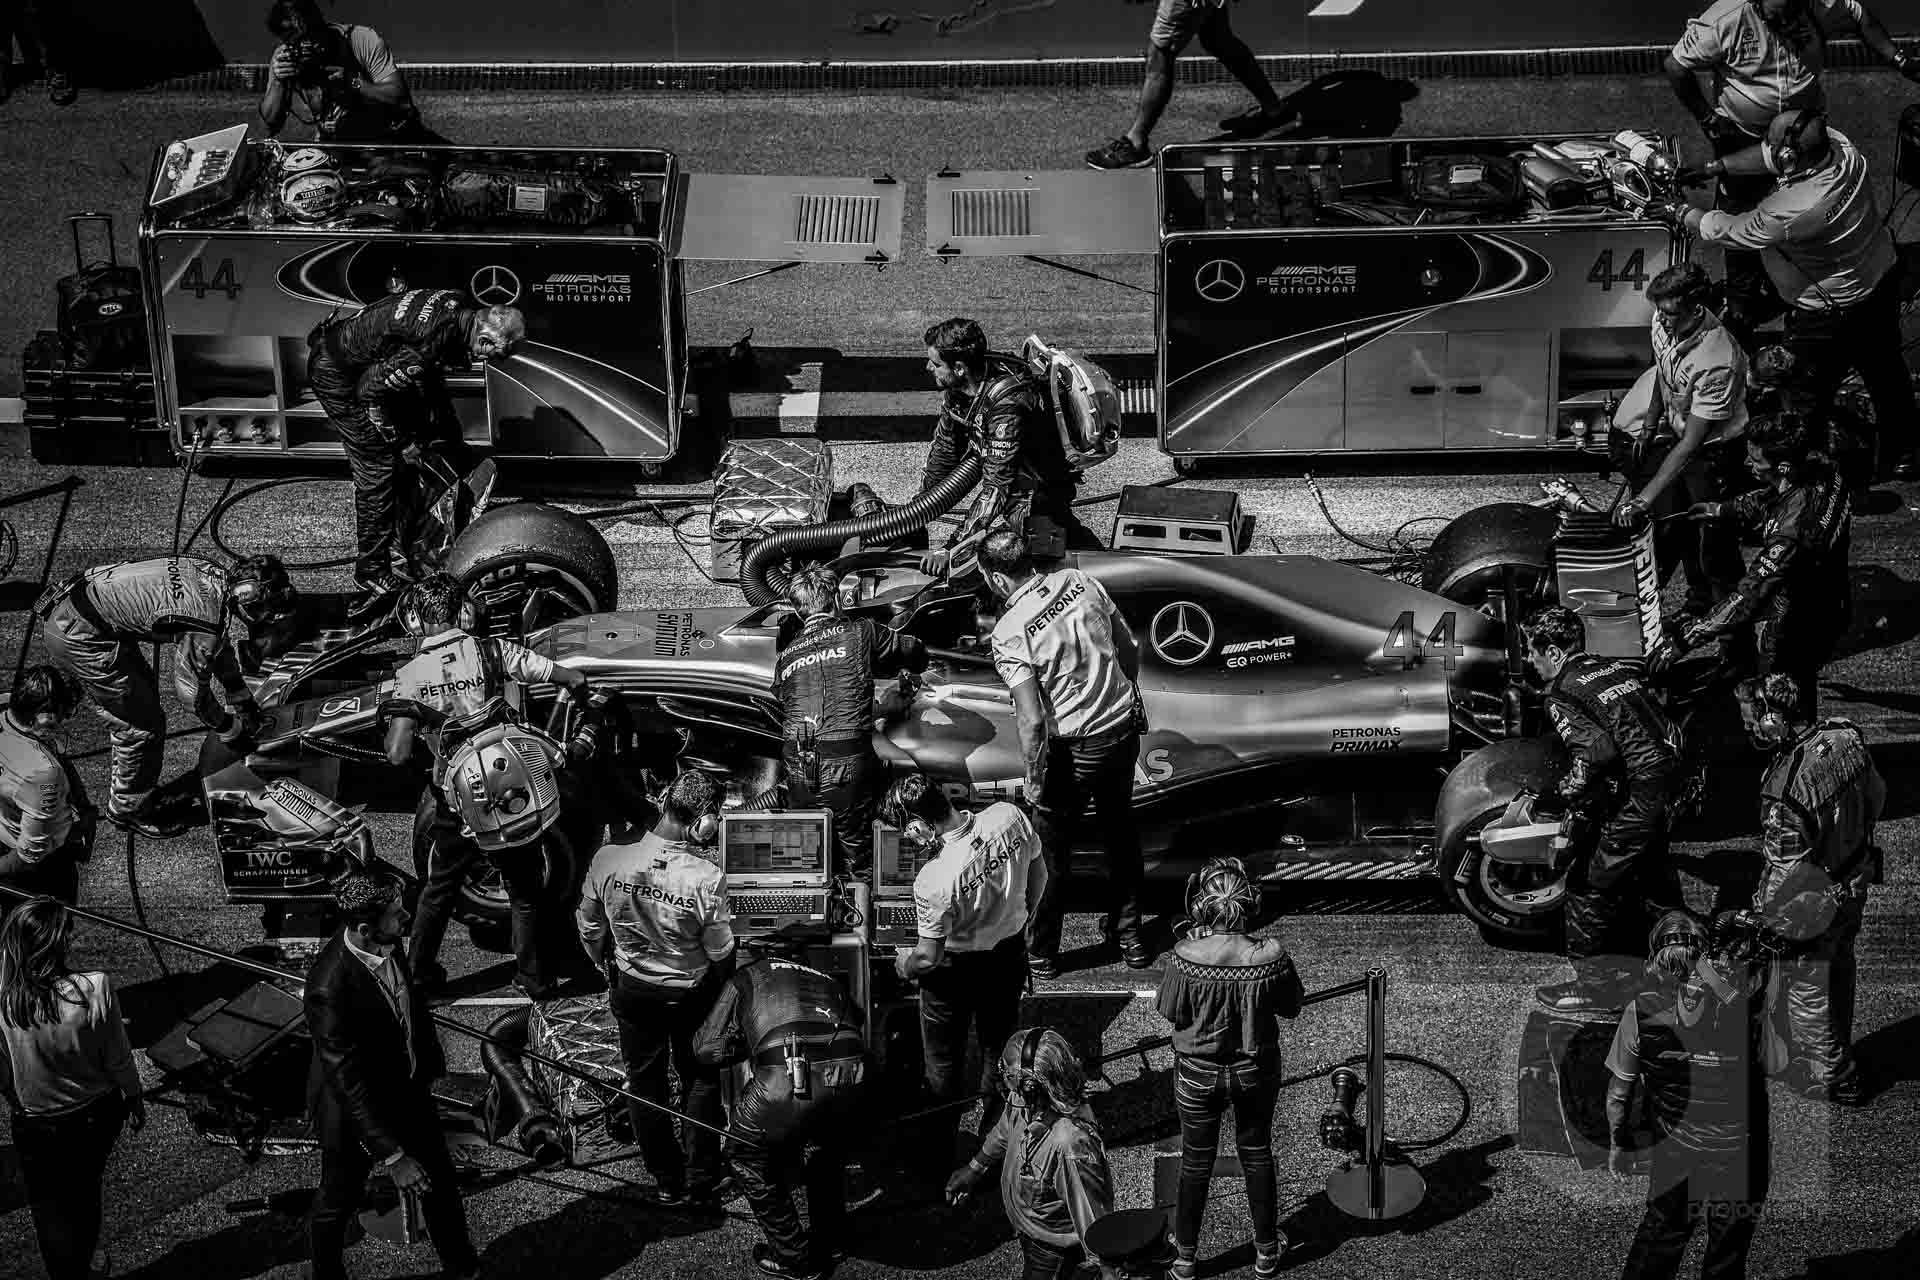 Formula 1 season 2018 in monochrome